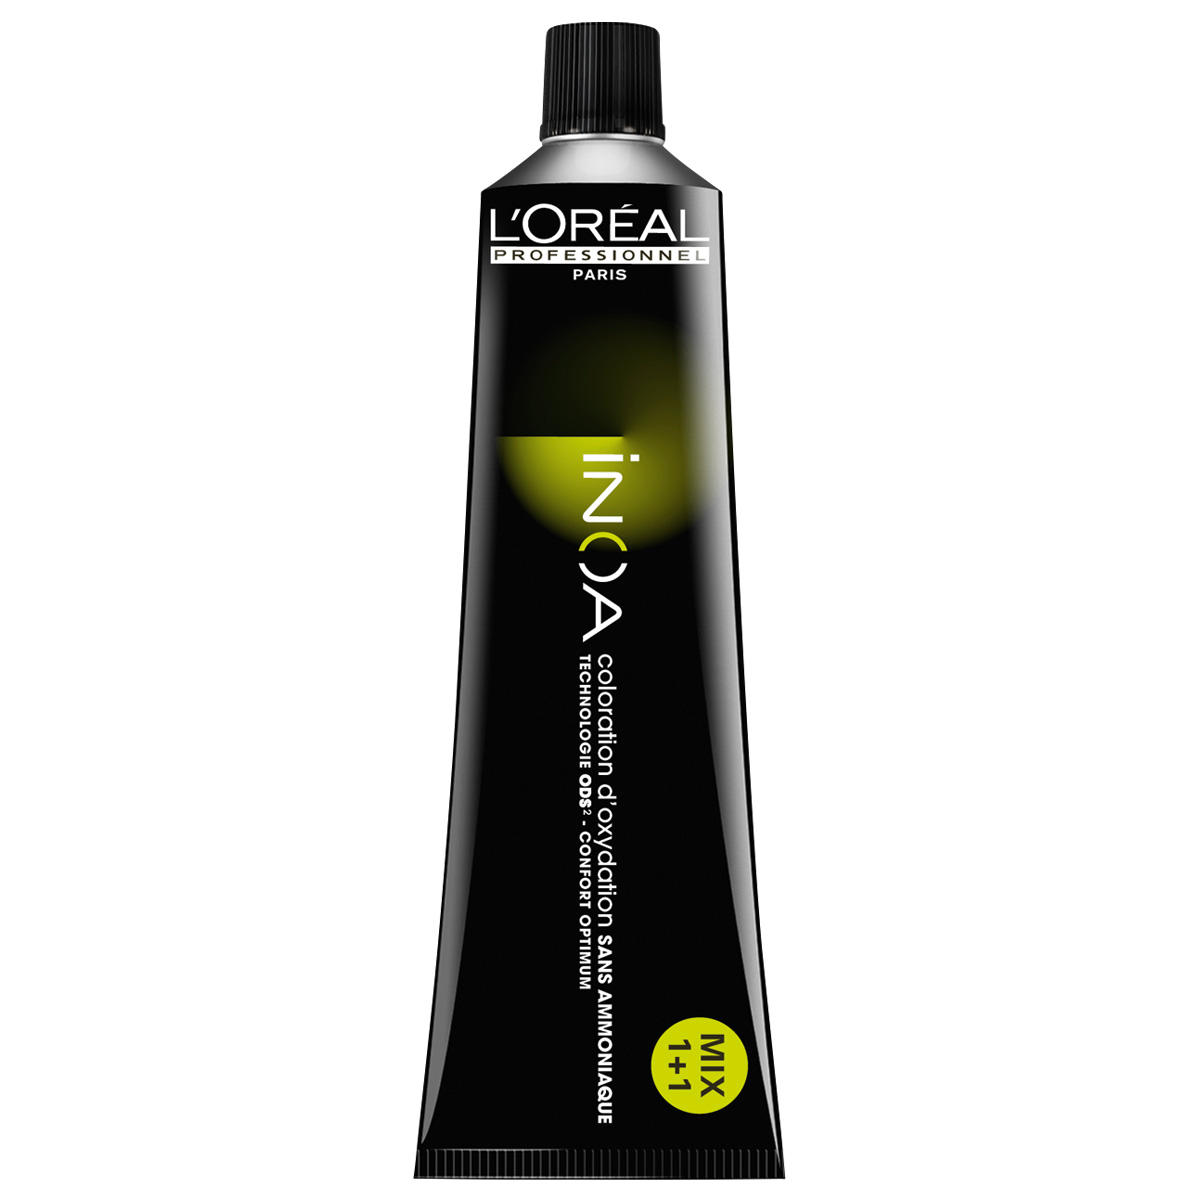 L'Oréal Professionnel Paris Coloration 8,34 Rubio claro dorado cobrizo, tubo 60 ml